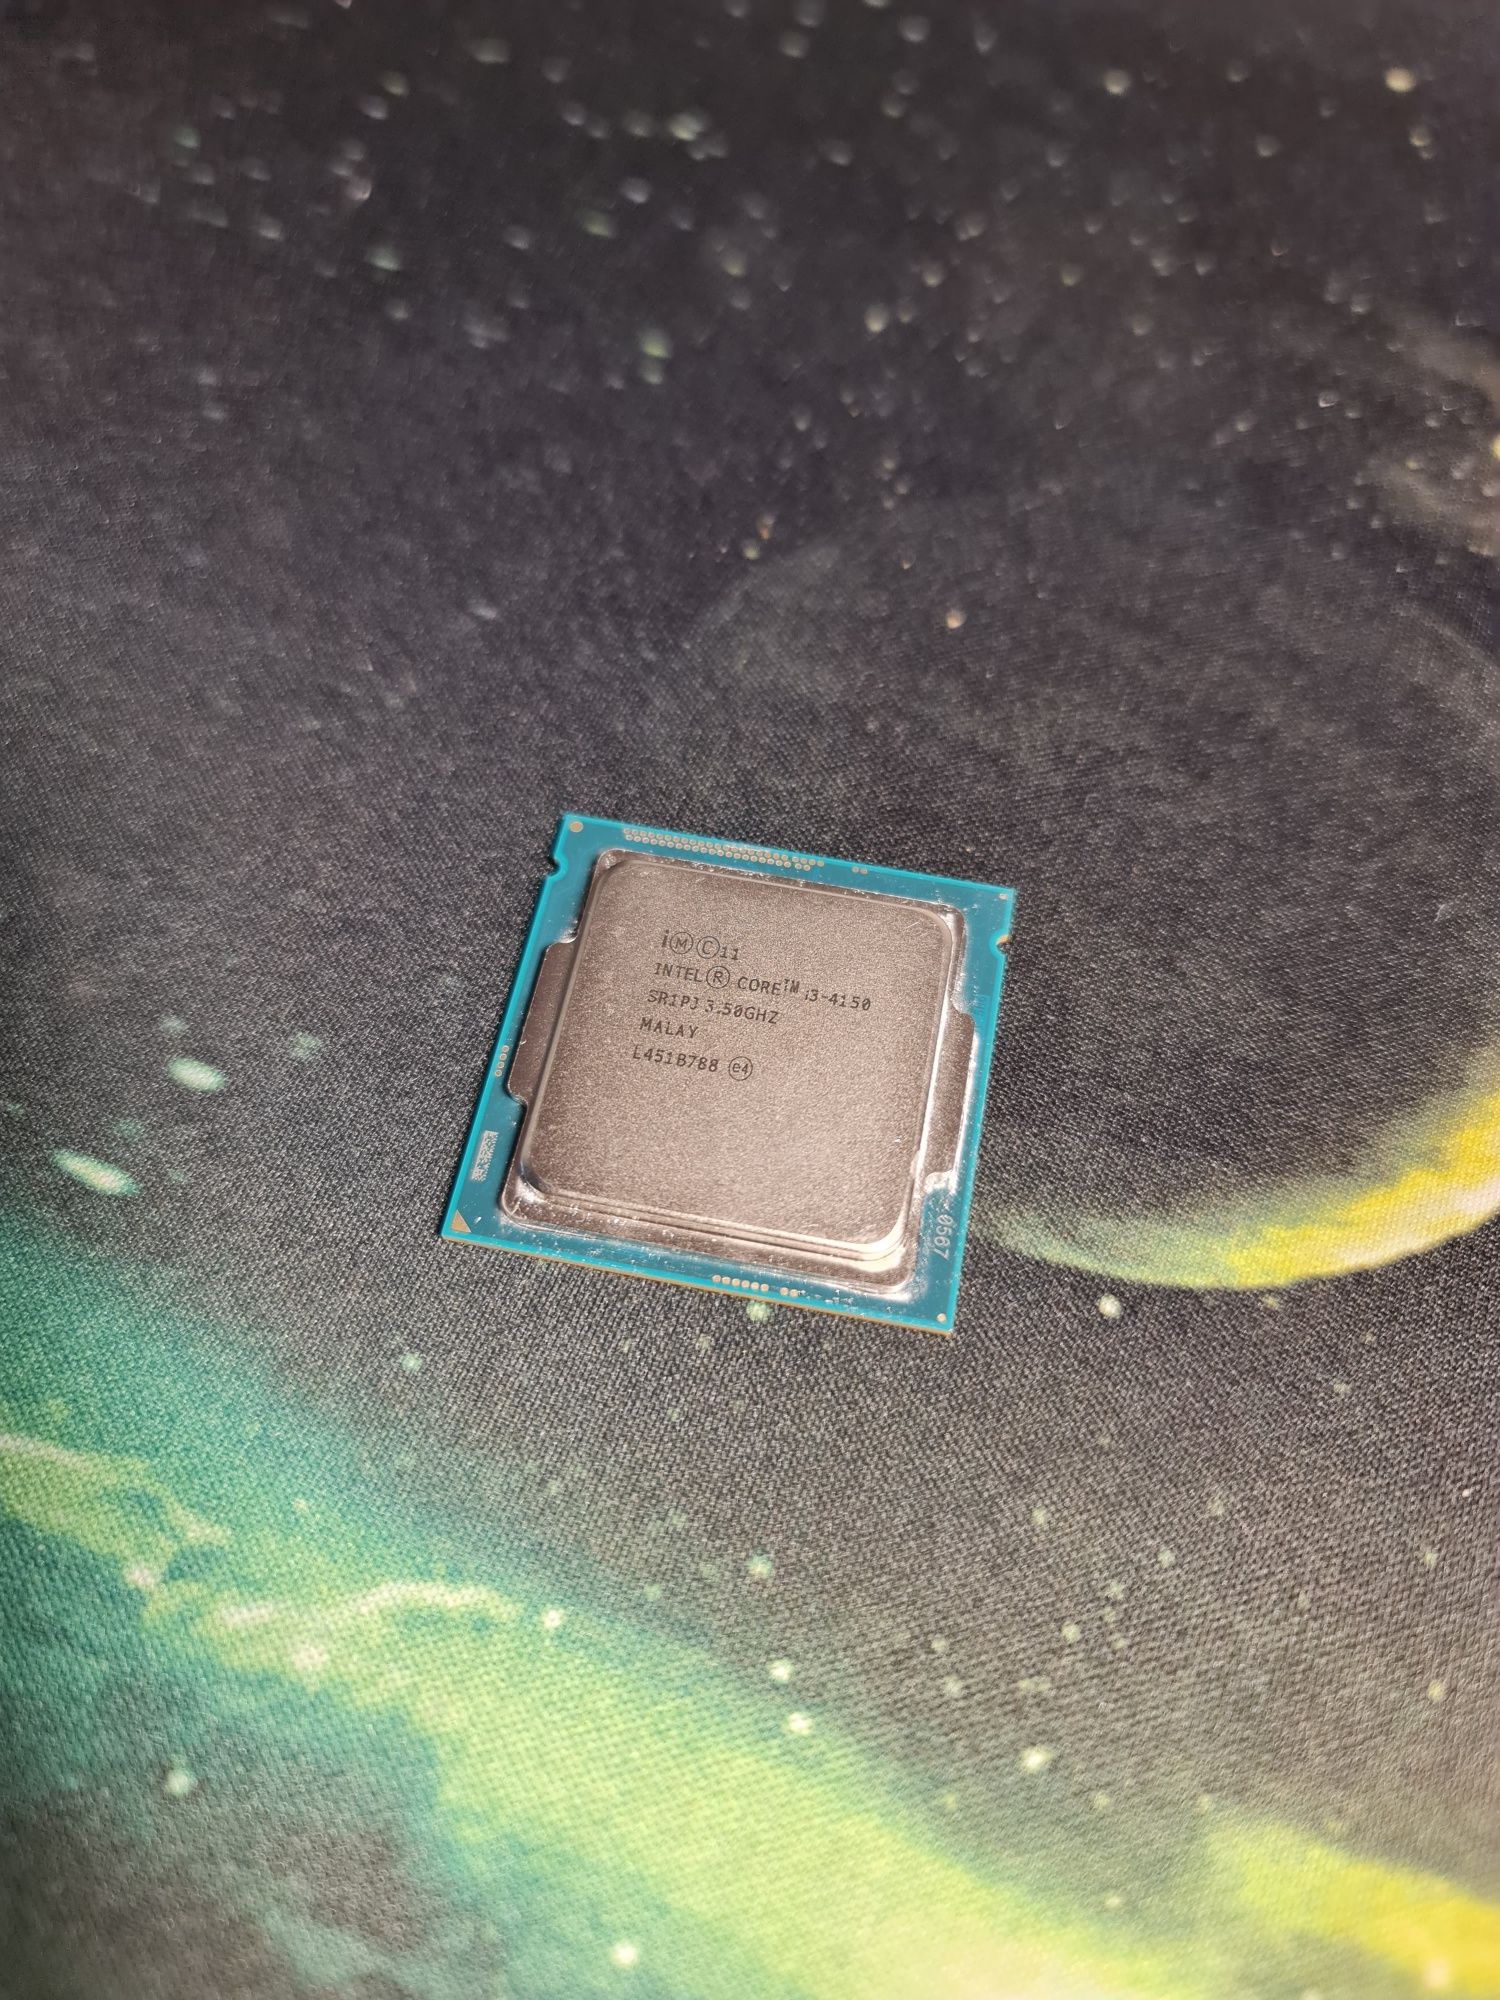 Procesor Intel i3-4150